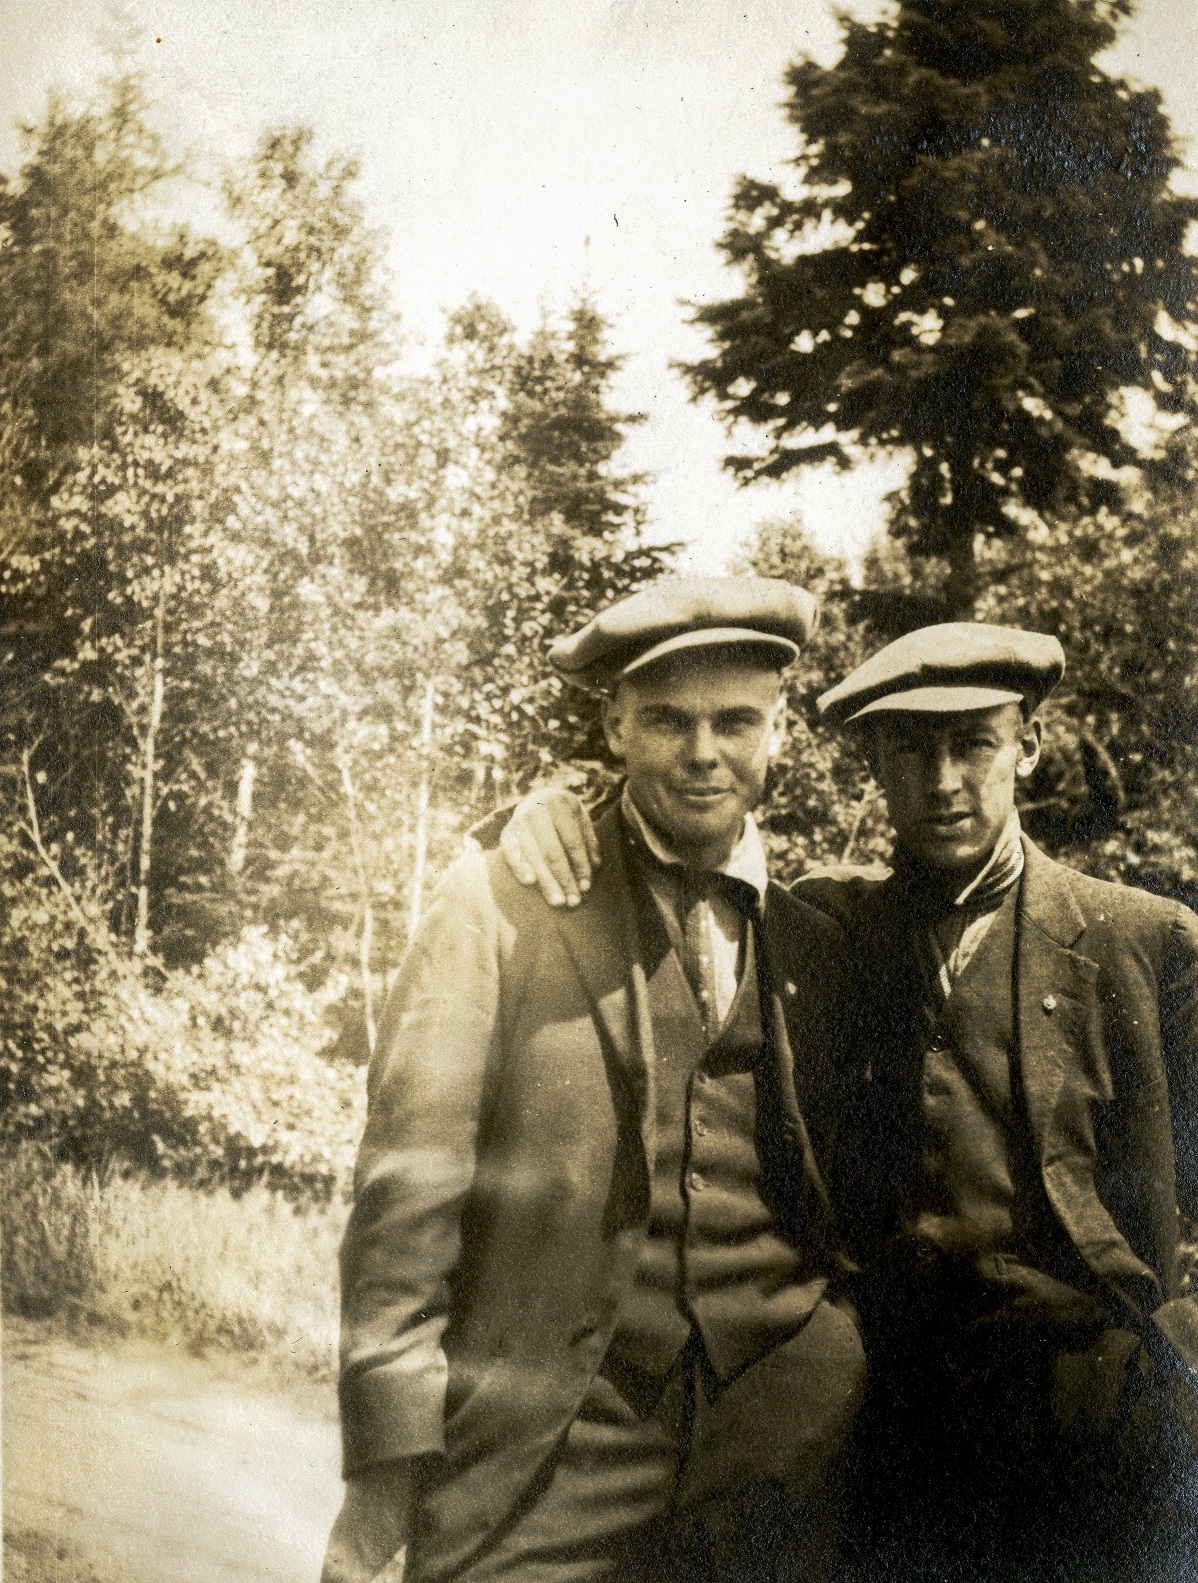 Rural queers Cub and Len in 1926